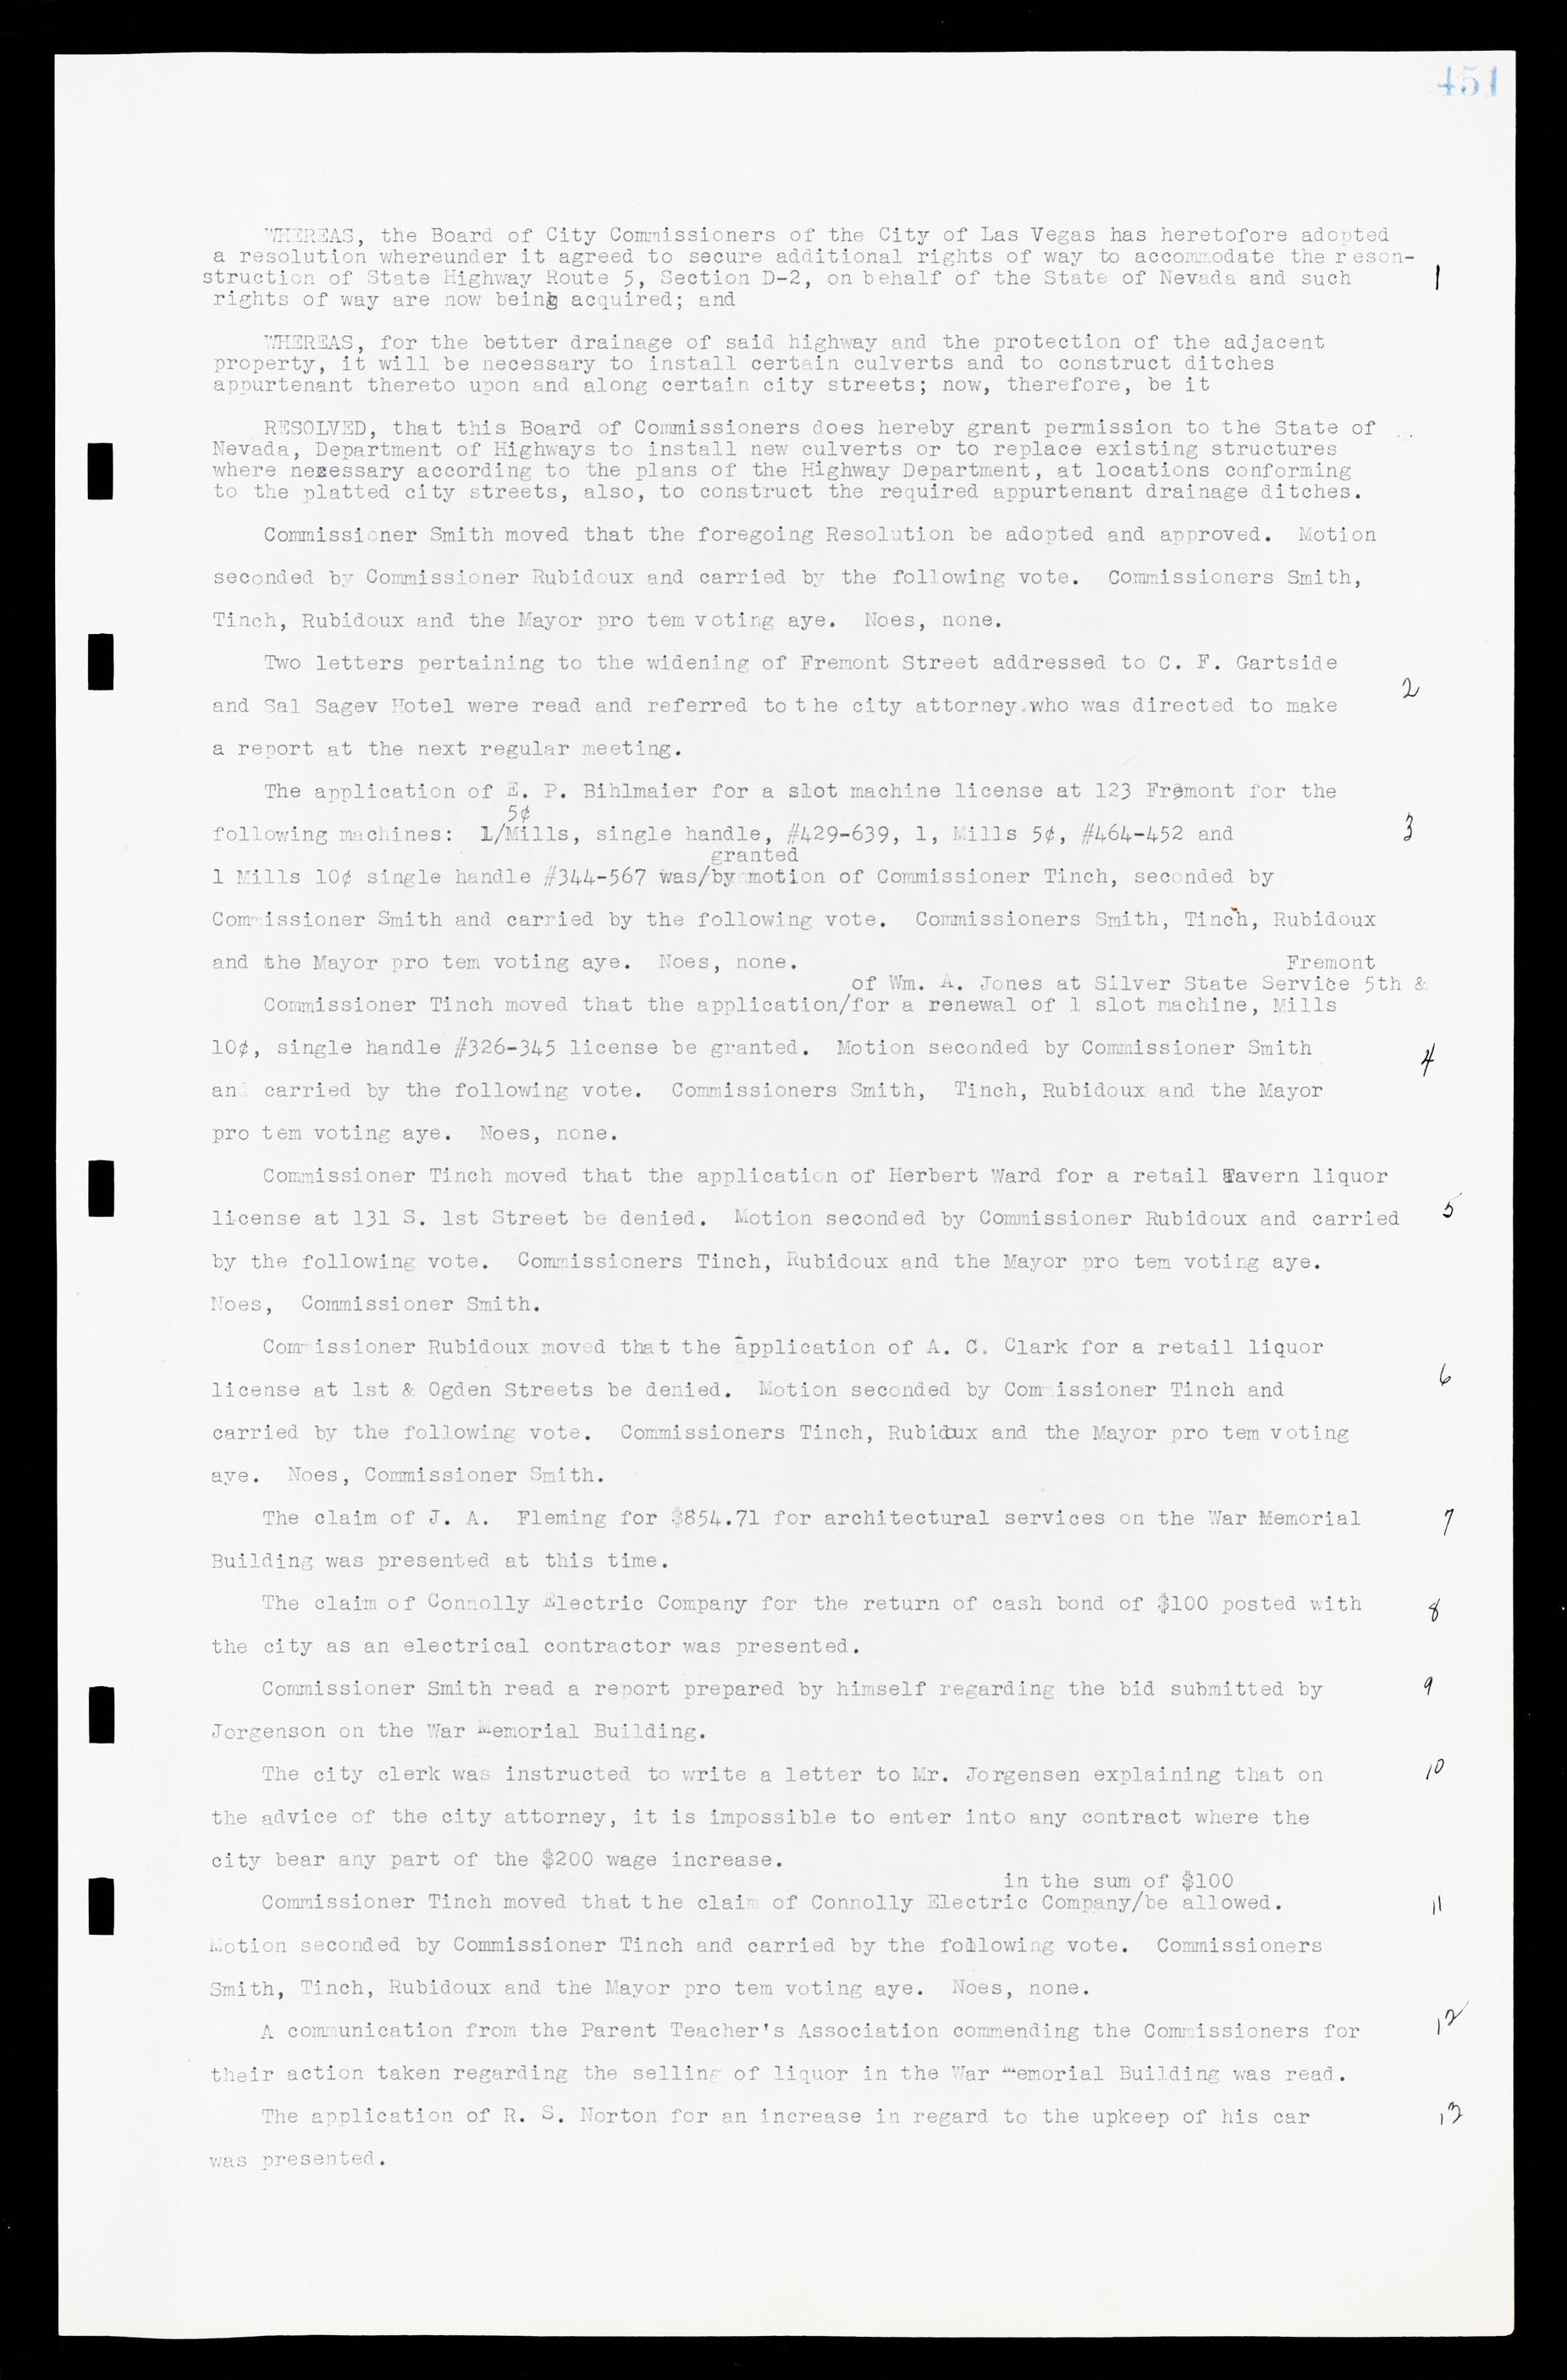 Las Vegas City Commission Minutes, February 17, 1937 to August 4, 1942, lvc000004-479